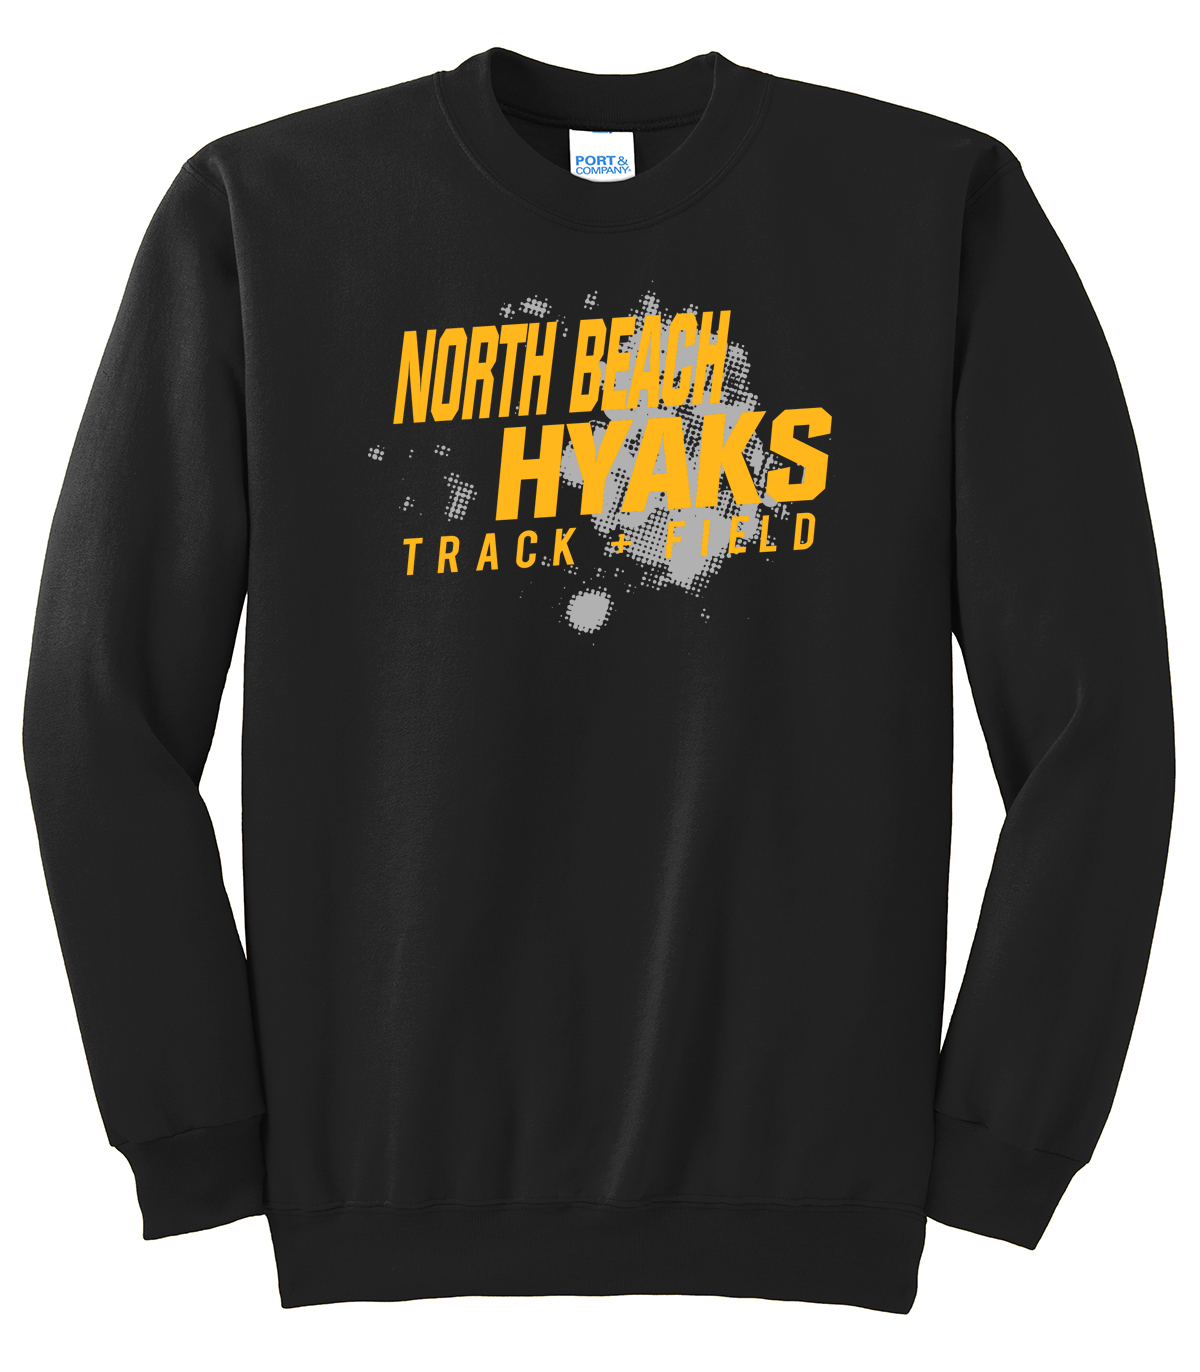 North Beach Track & Field Crew Neck Sweater